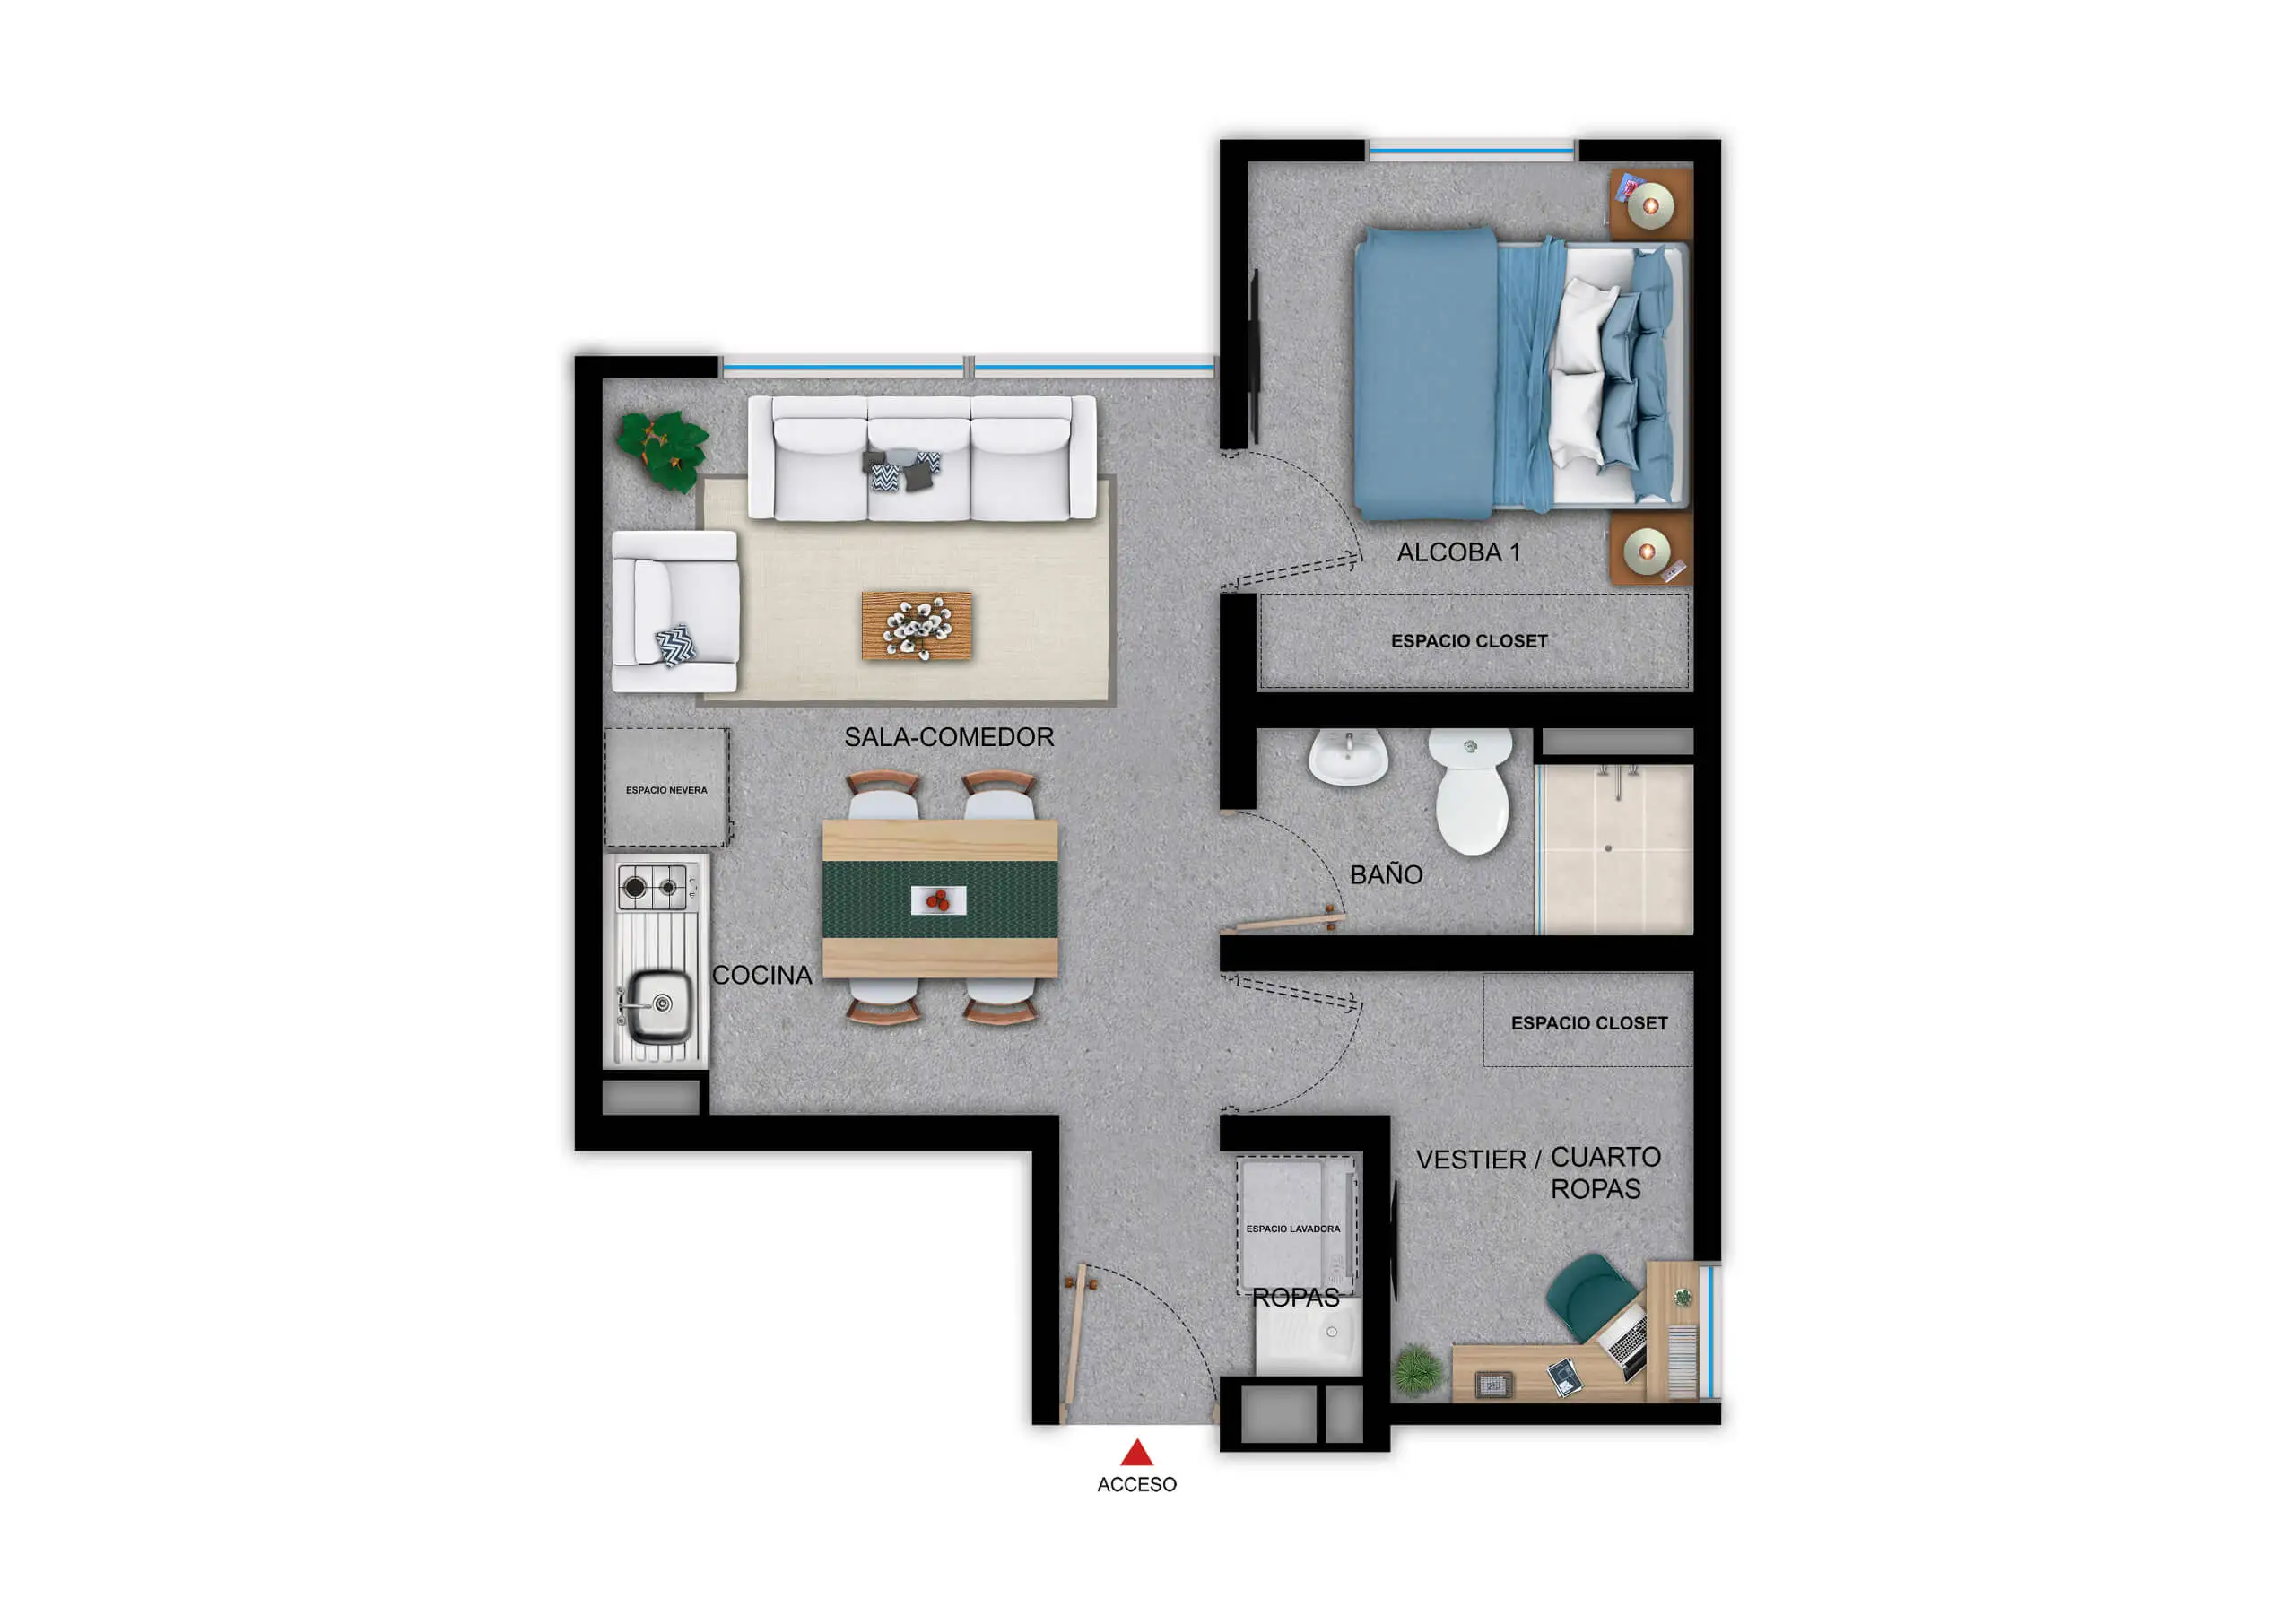 Apartamento Tipo 2